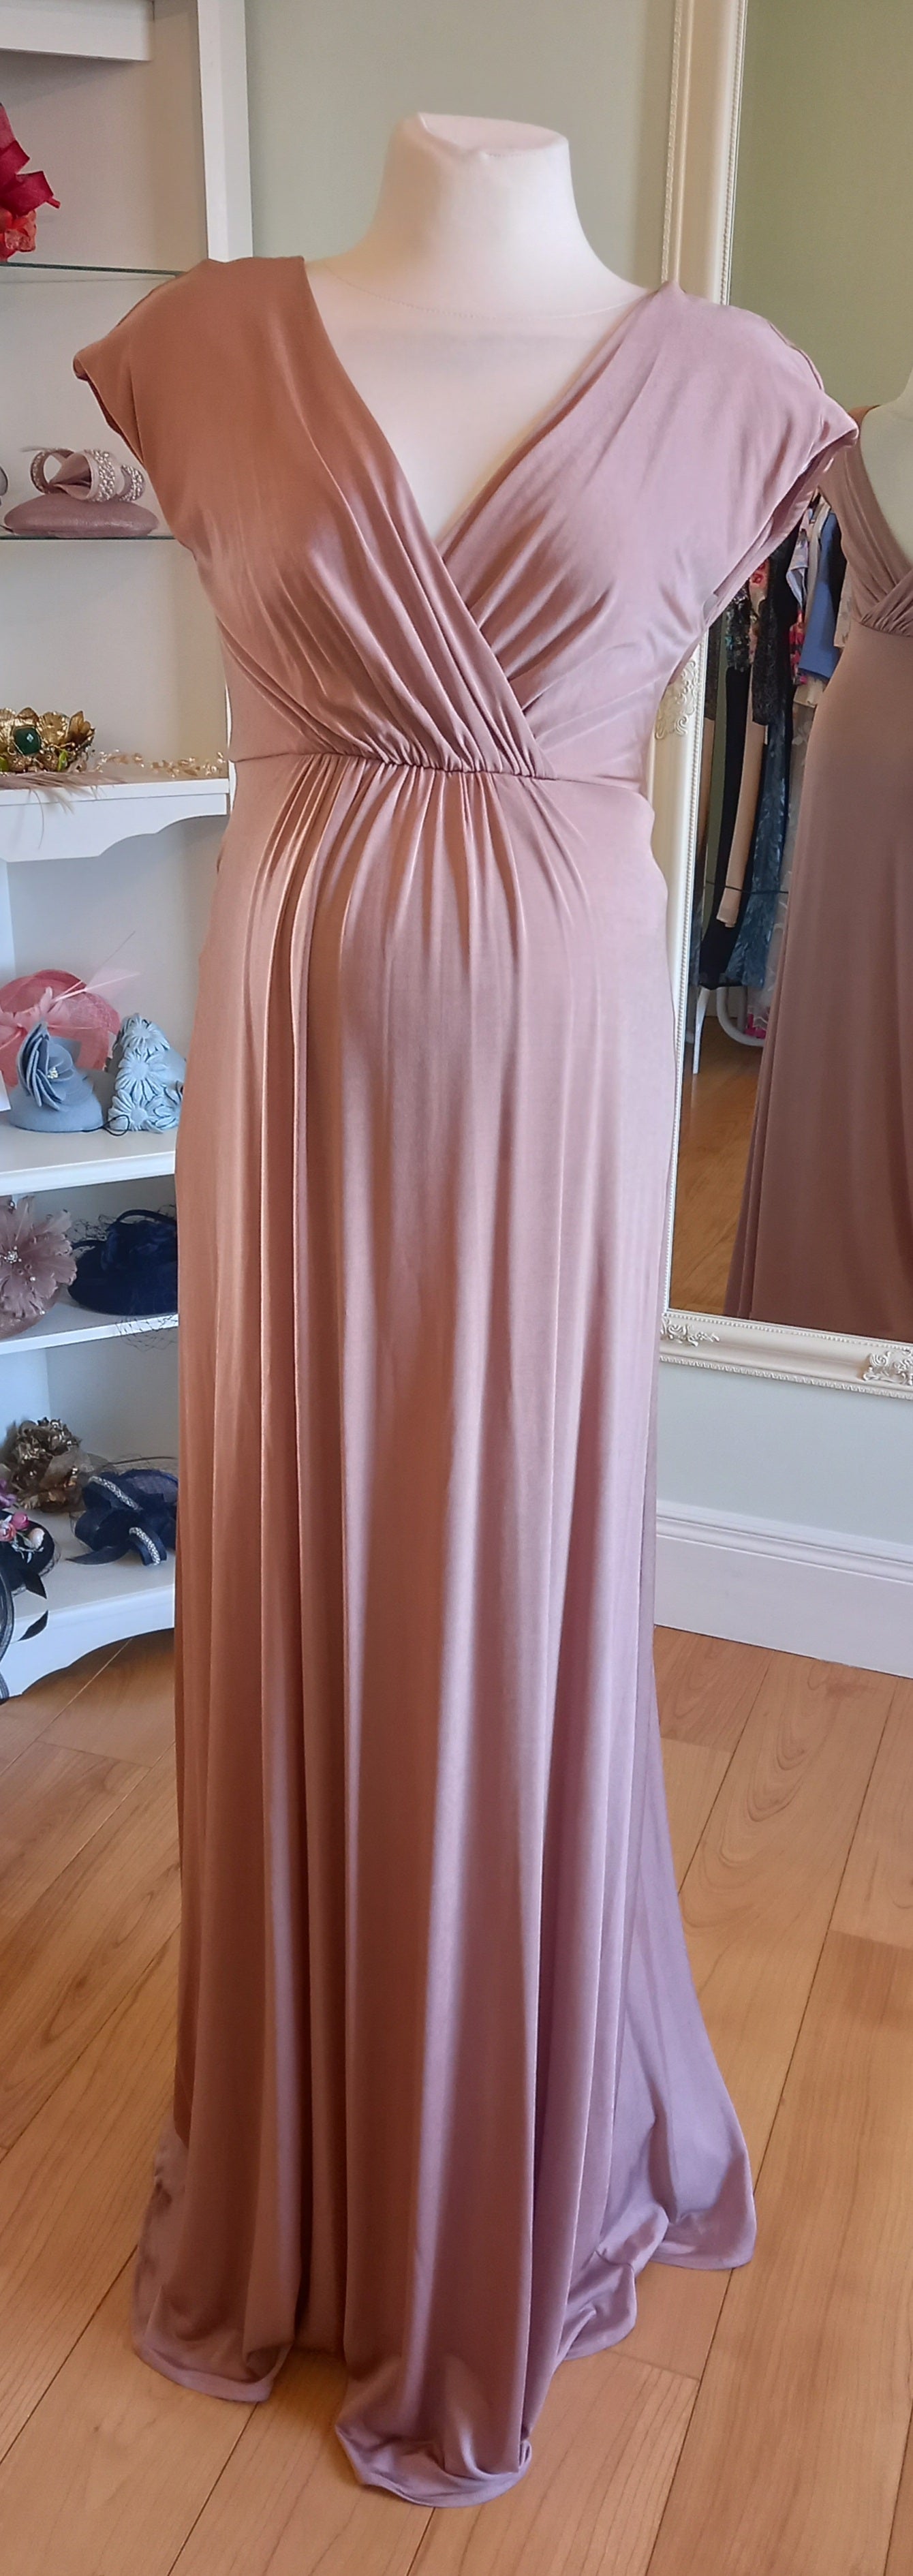 Tiffany Rose Francesca Maxi Dress in Blush (BNWT) - Size 1 (UK 8/10)